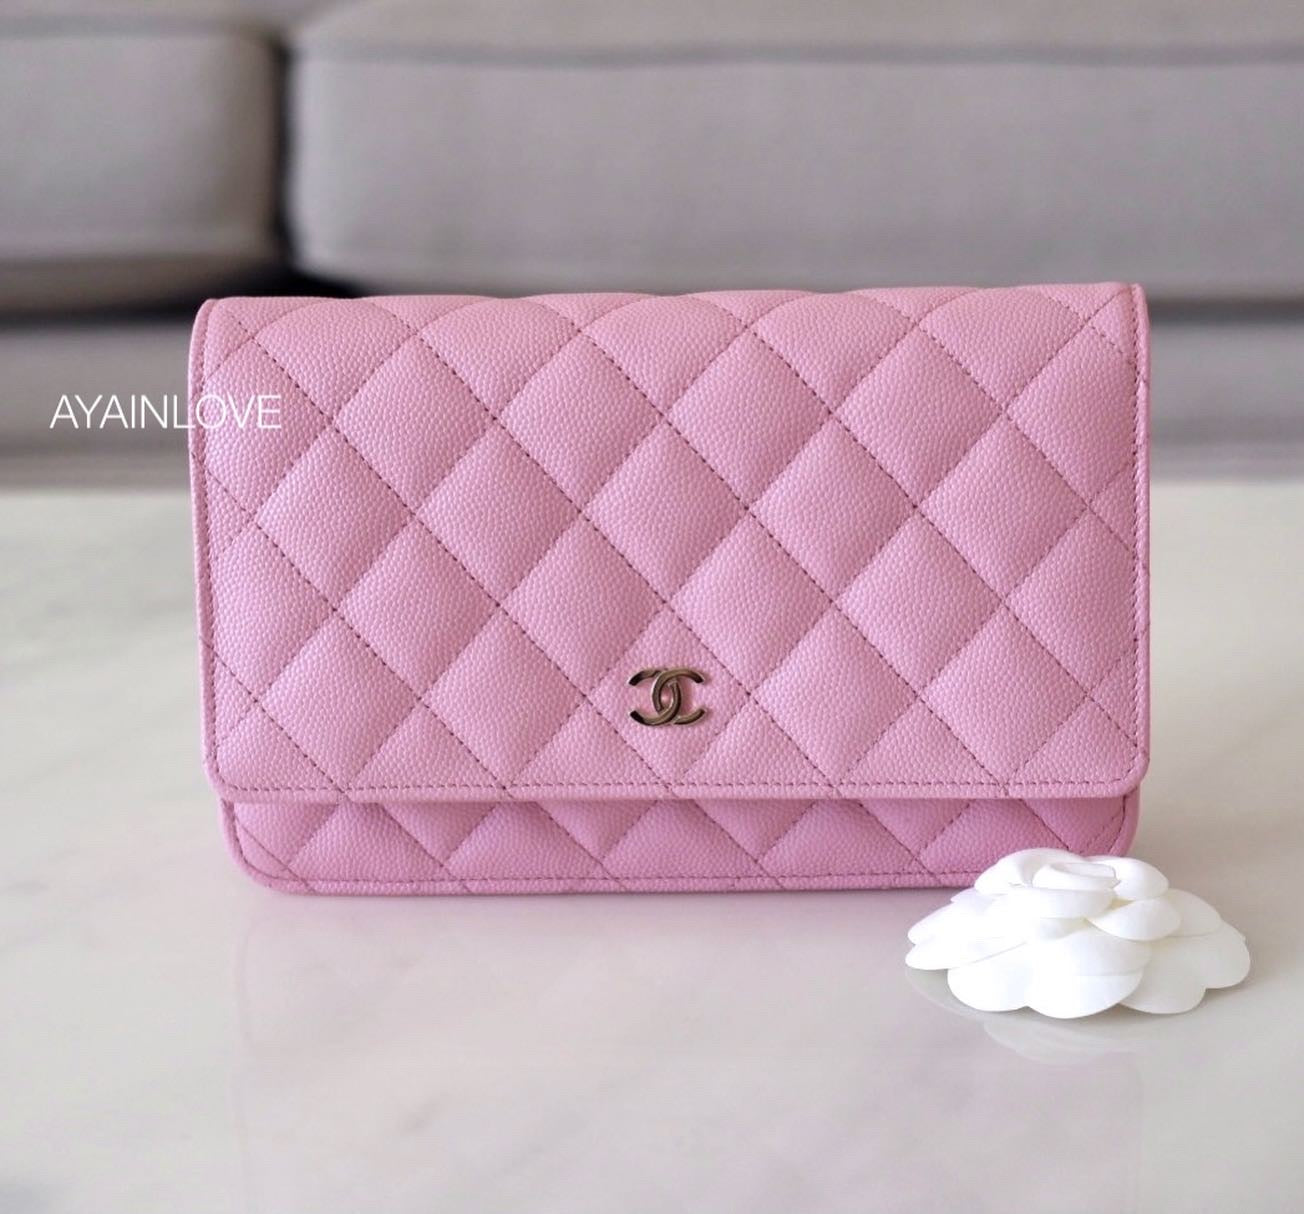 Chanel WOC Caviar Soft Pink Caviar Leather Bag